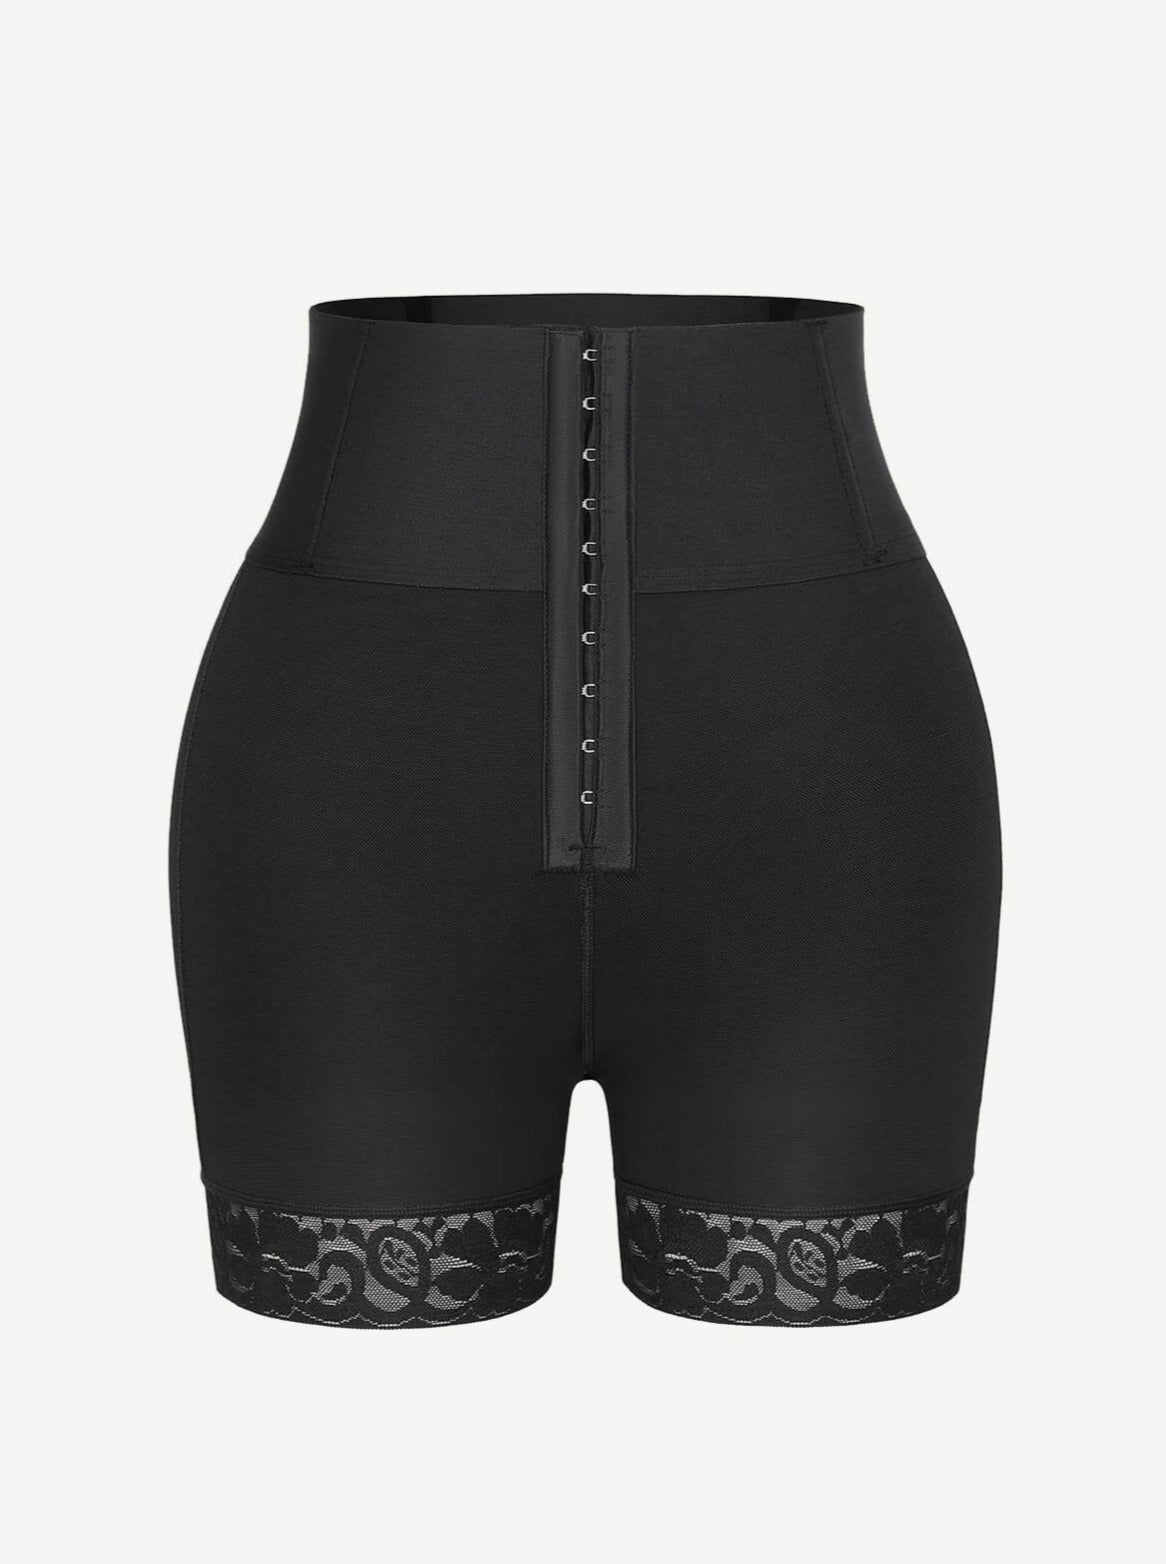 Lovskoo Slip Shorts for Women Under Dress Shapewear Tummy Control Butt  Lifter High Waist Seamless Waist Trainer Stomach Body Shaper Thigh Slimming  Girdles Black 